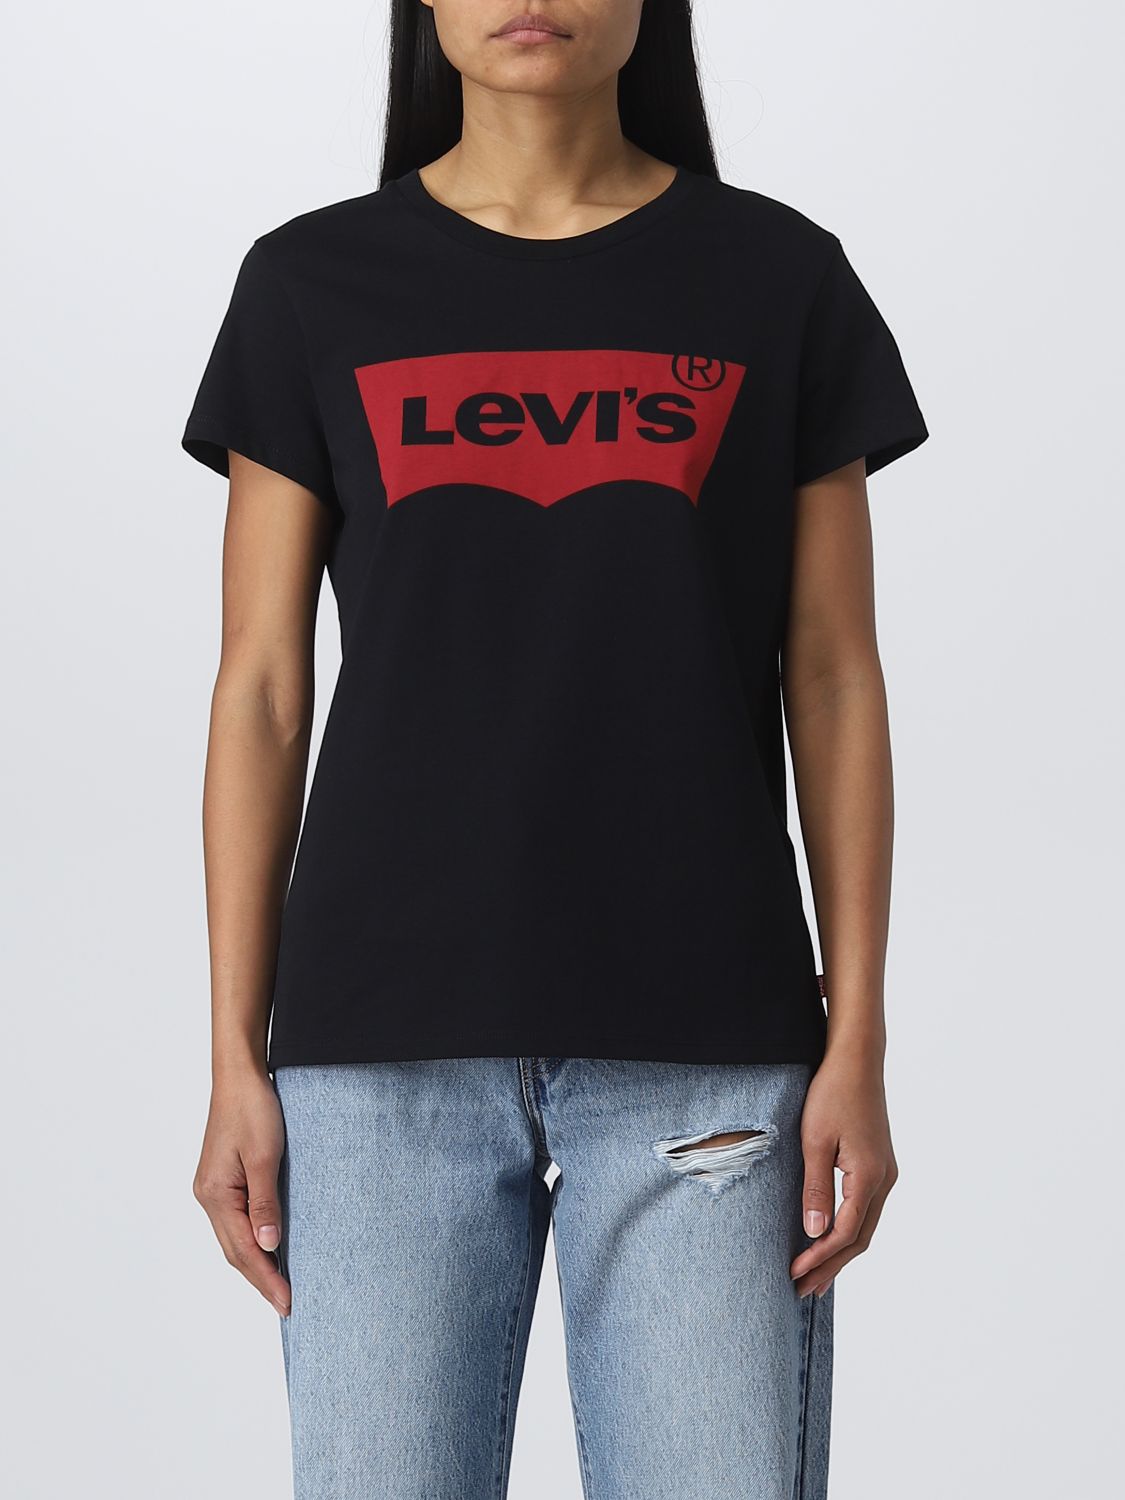 LEVI'S: t-shirt for woman - Black | Levi's t-shirt 173690201 online on ...